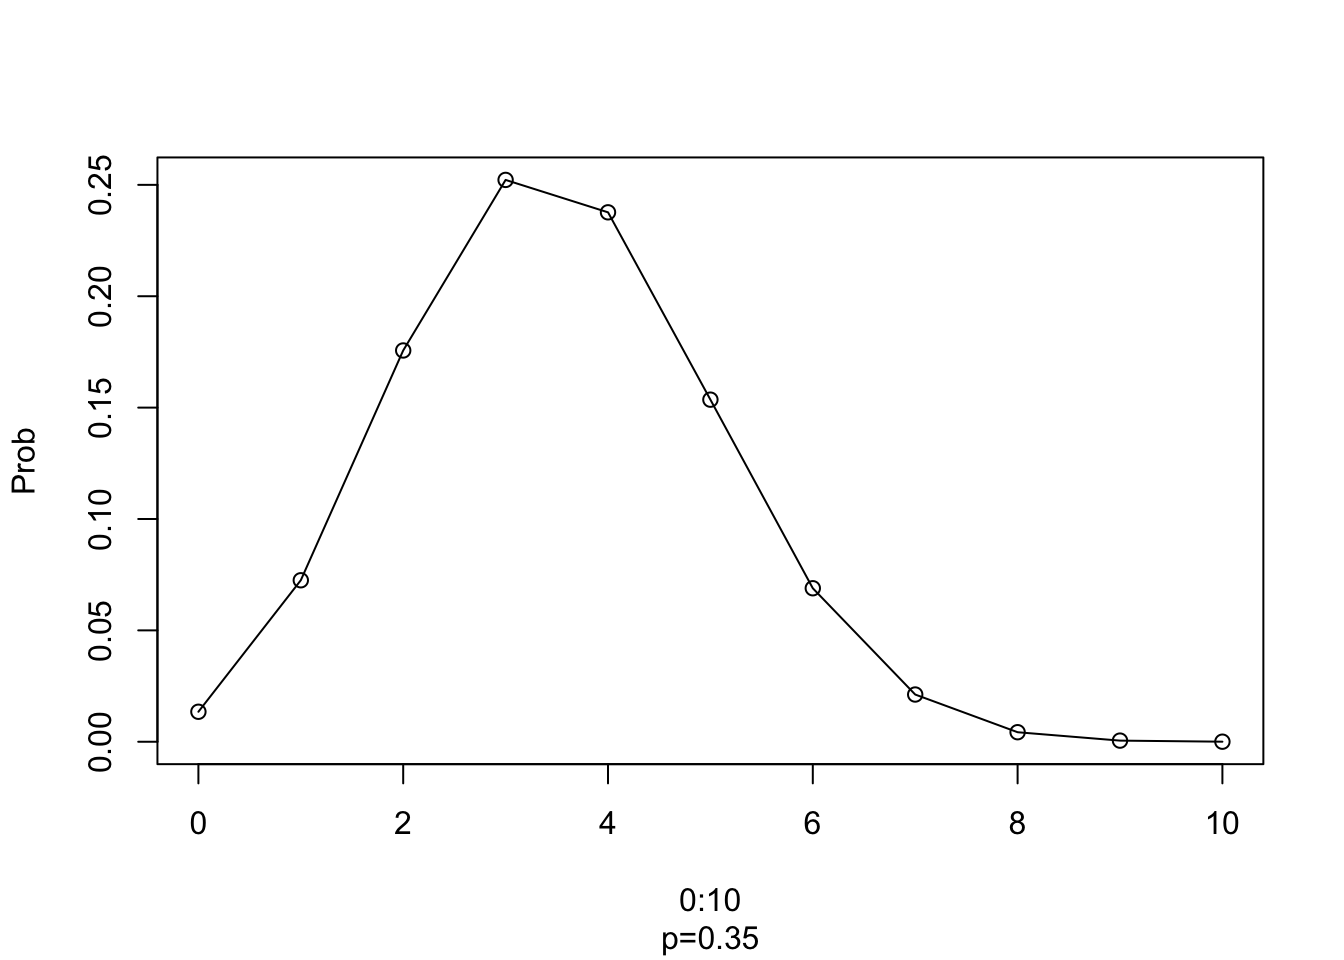 Plot de la distribucion binomial, para n = 0:10;  x = 10, p = 0.35.